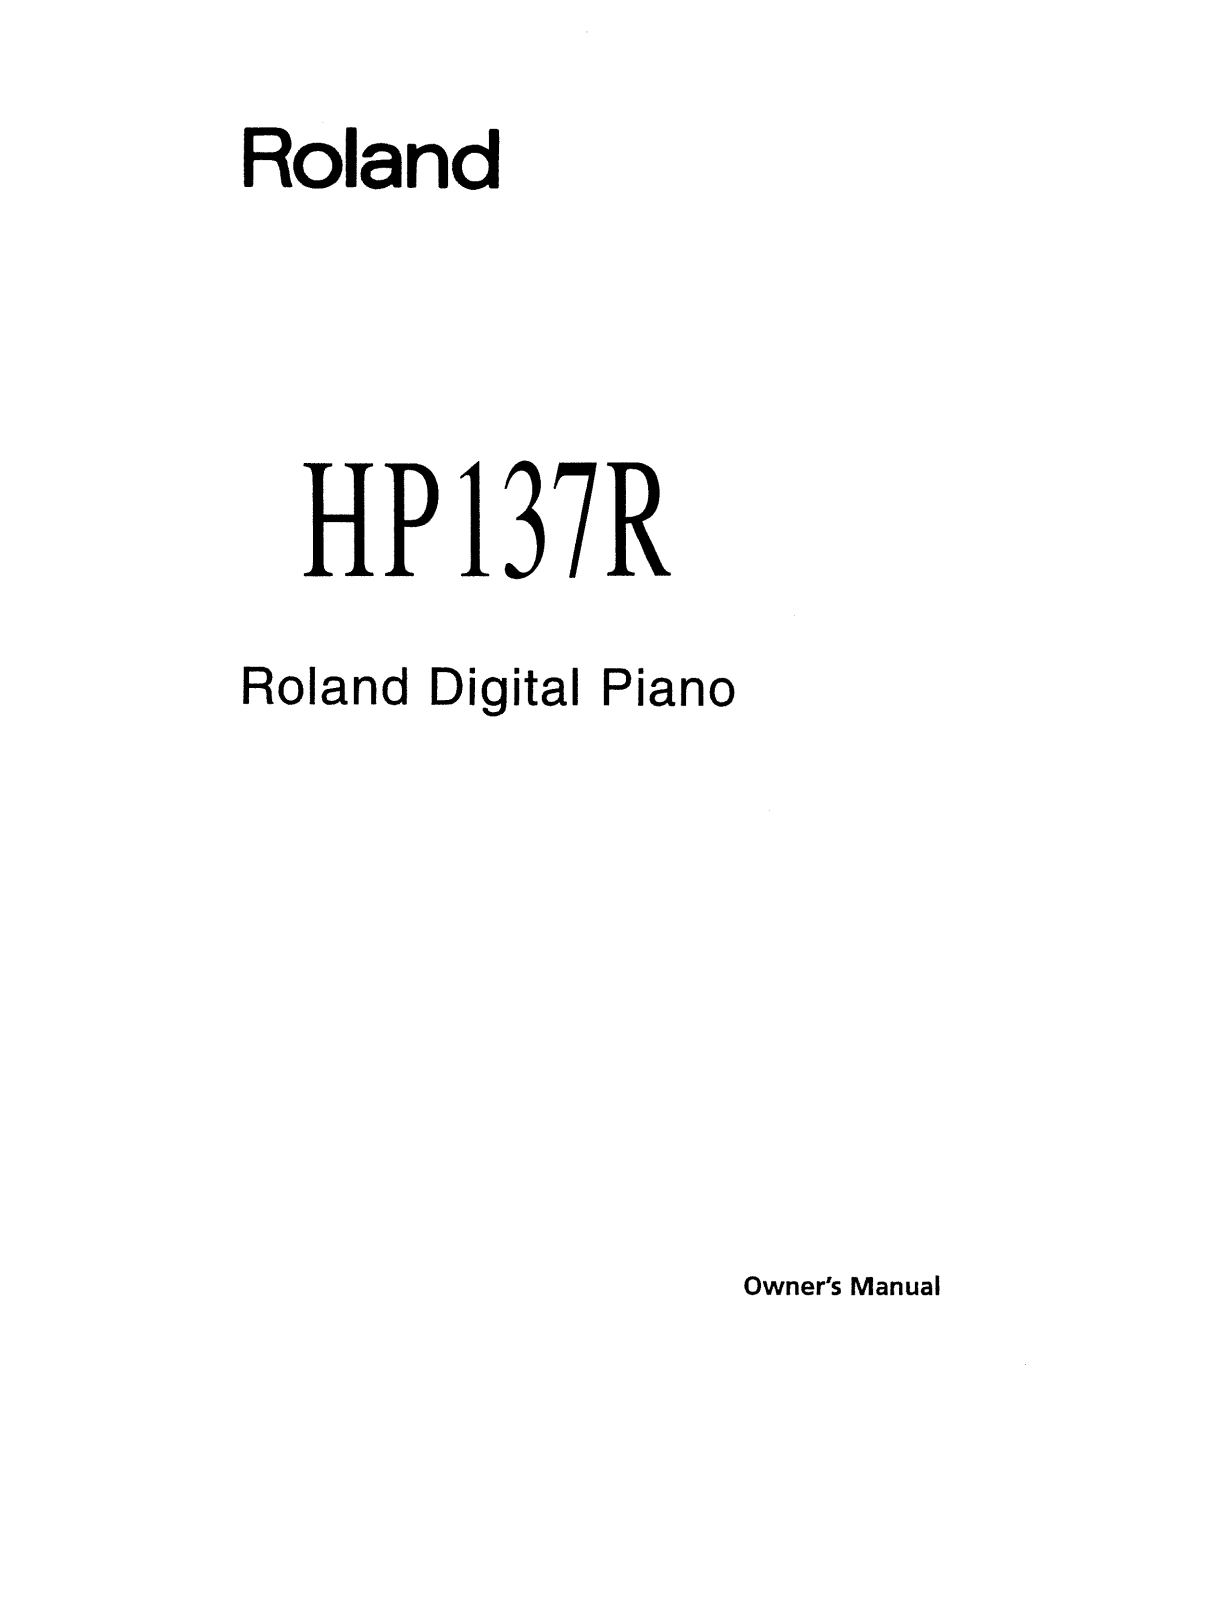 Roland HP 137R Service Manual